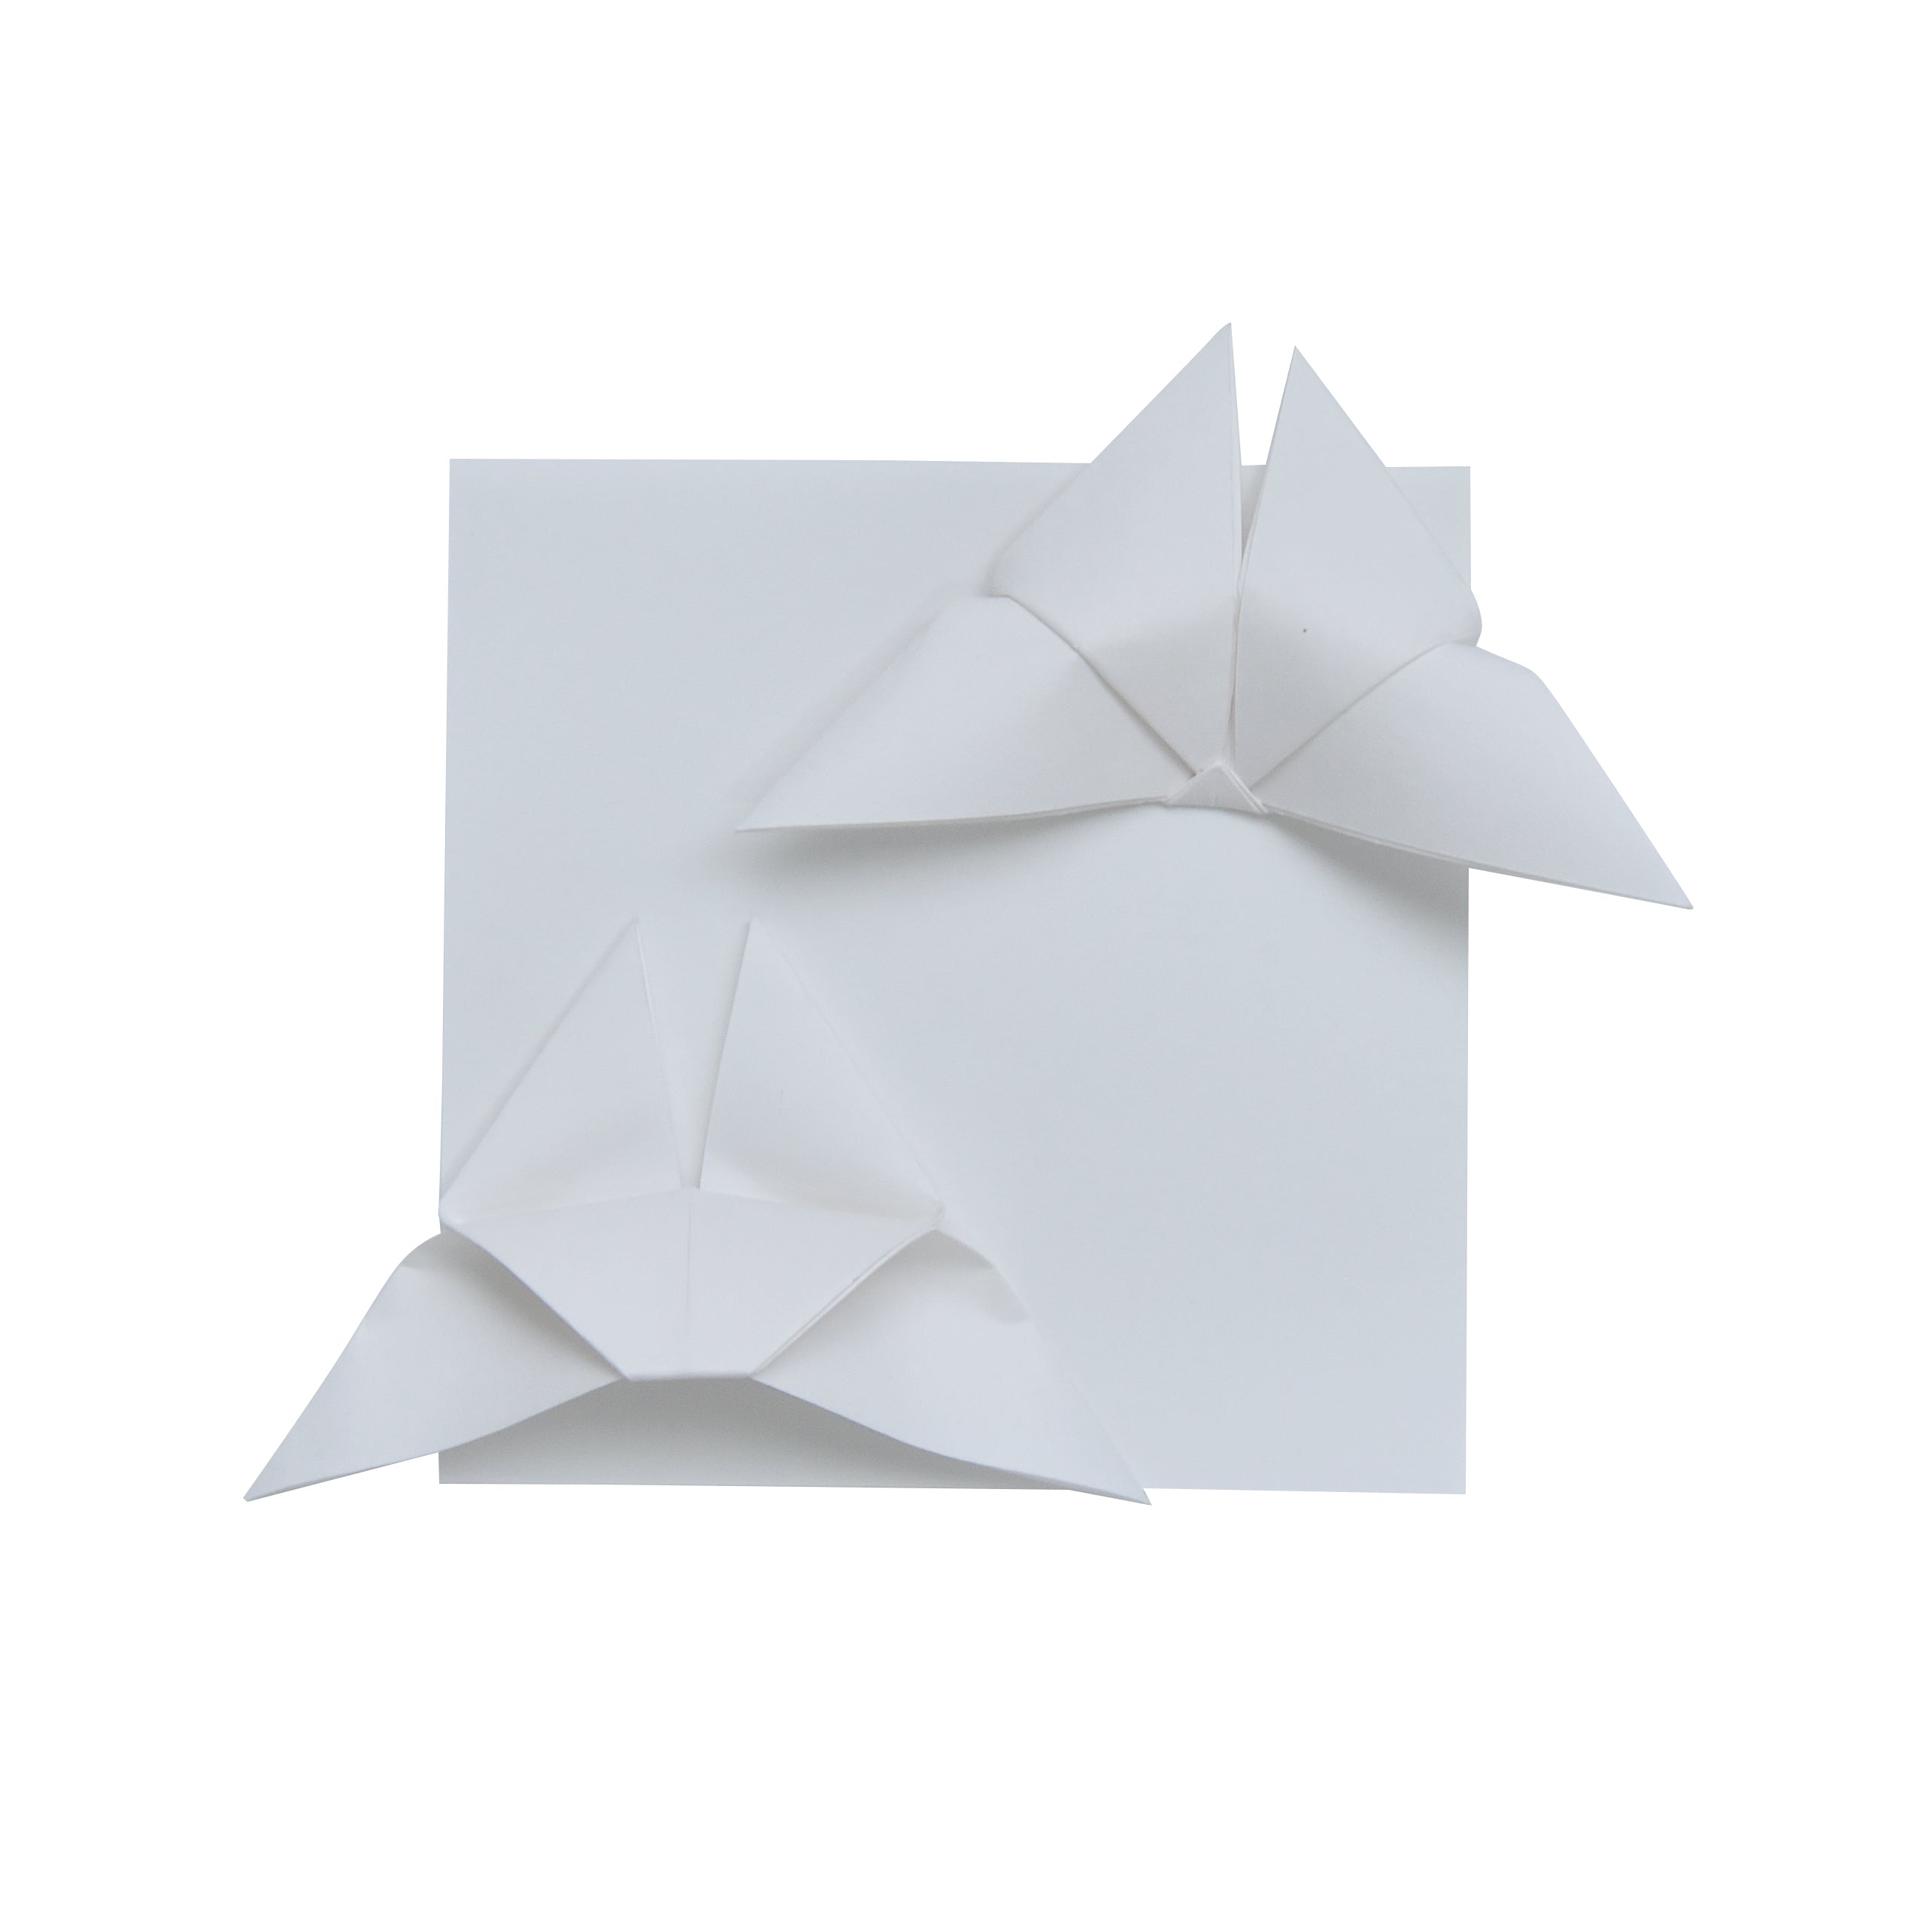 100 fogli di carta origami avorio - 3x3 pollici - confezione quadrata di carta per piegare, gru di carta origami, decorazione origami